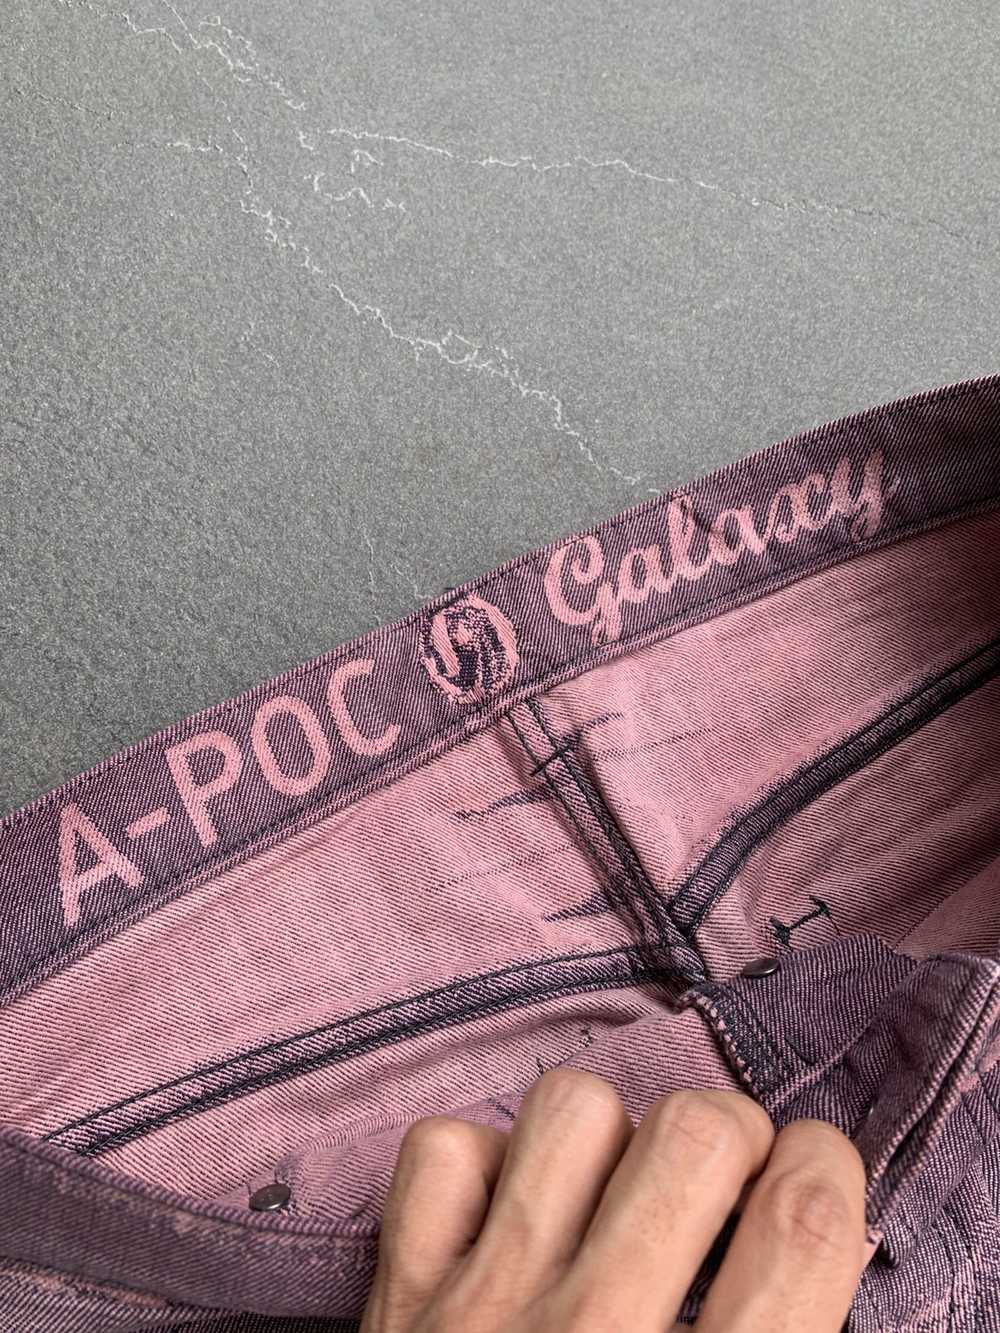 Issey Miyake APOC Galaxy Purple Denim Jeans - image 5